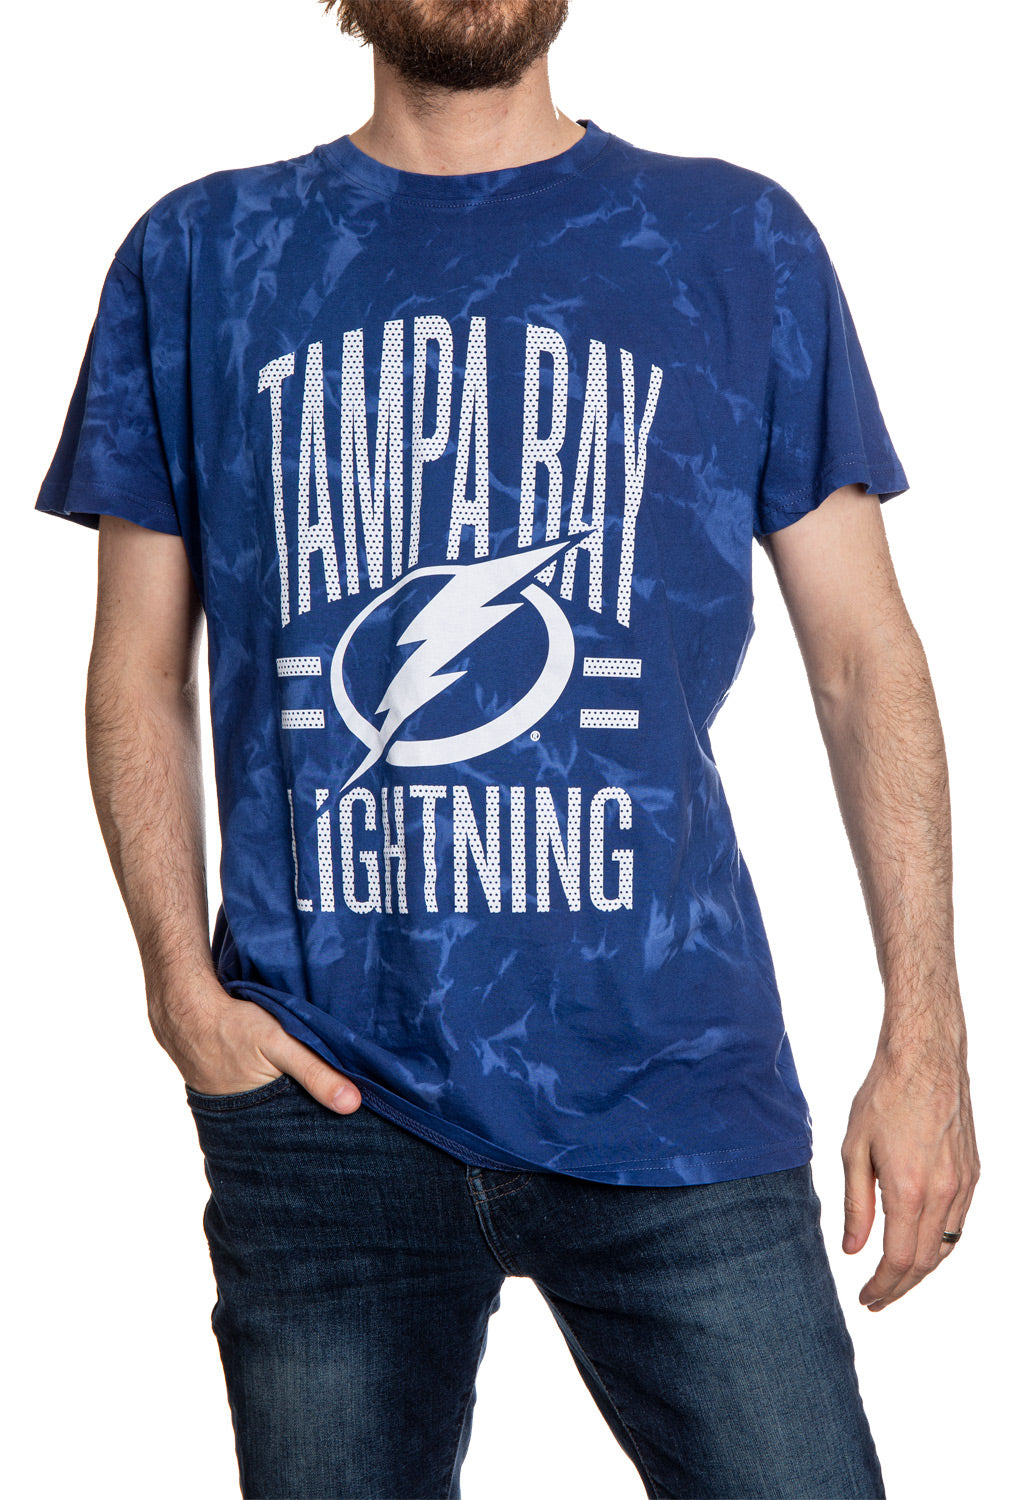 Tampa Bay Lightning Crystal Tie Dye T-Shirt